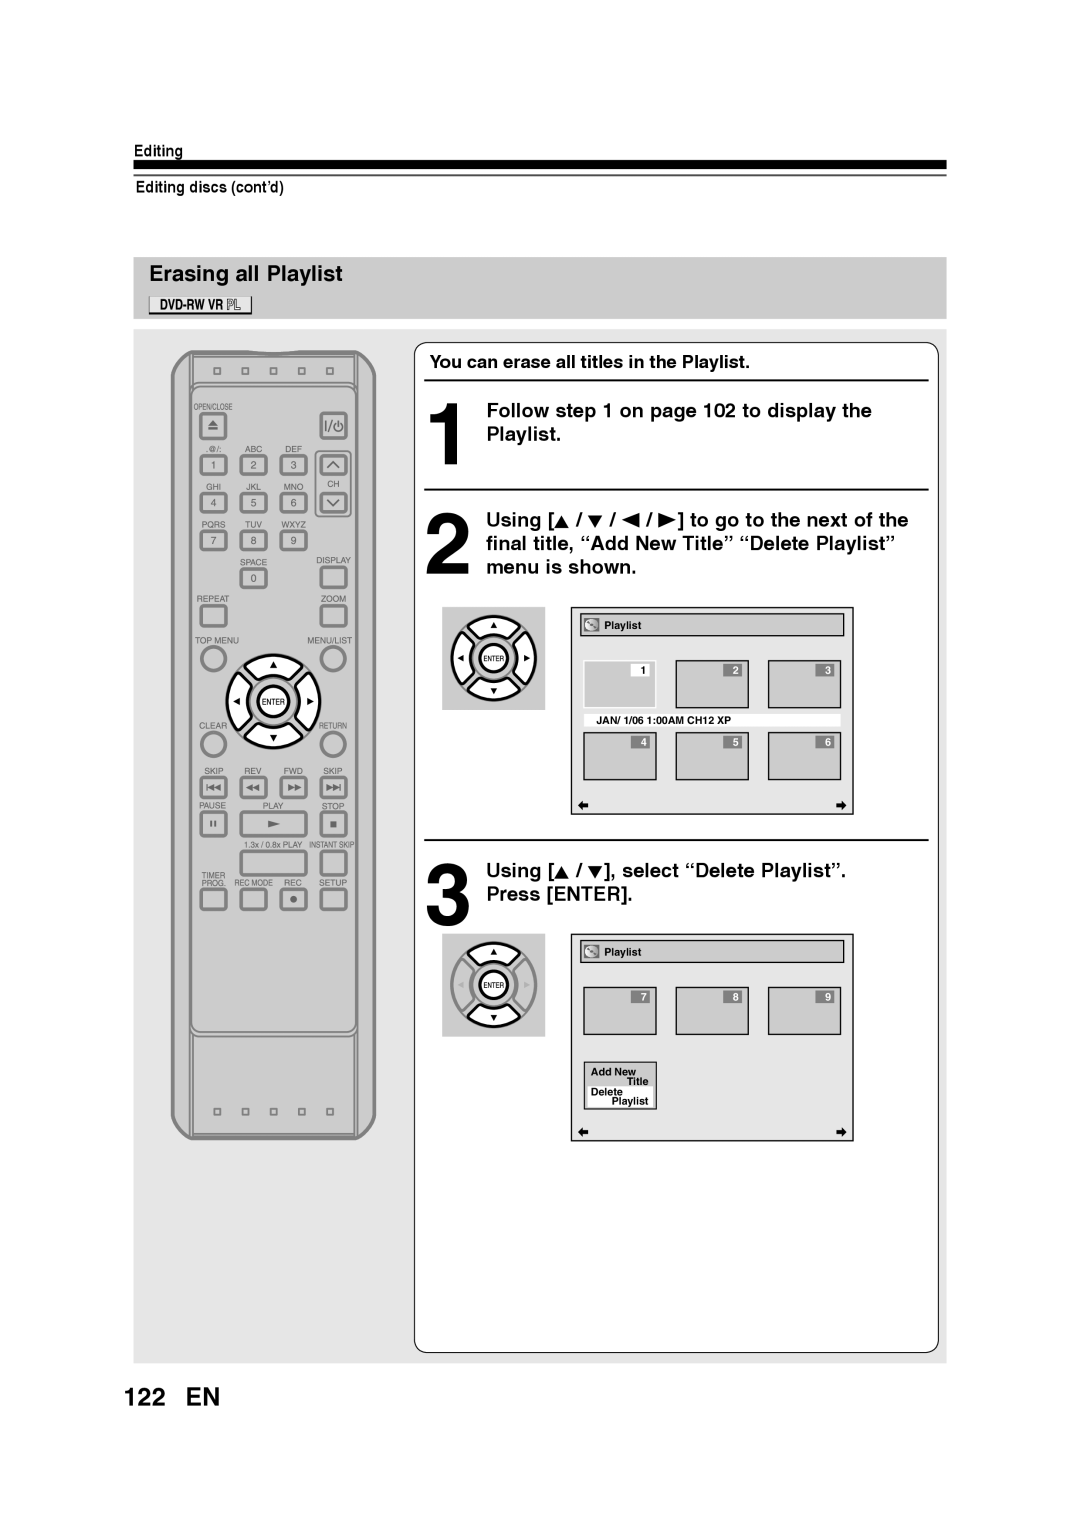 Toshiba D-RW2SU/D-RW2SC 122 EN, Erasing all Playlist, Using K / L, select “Delete Playlist” Press ENTER, Add New, Title 